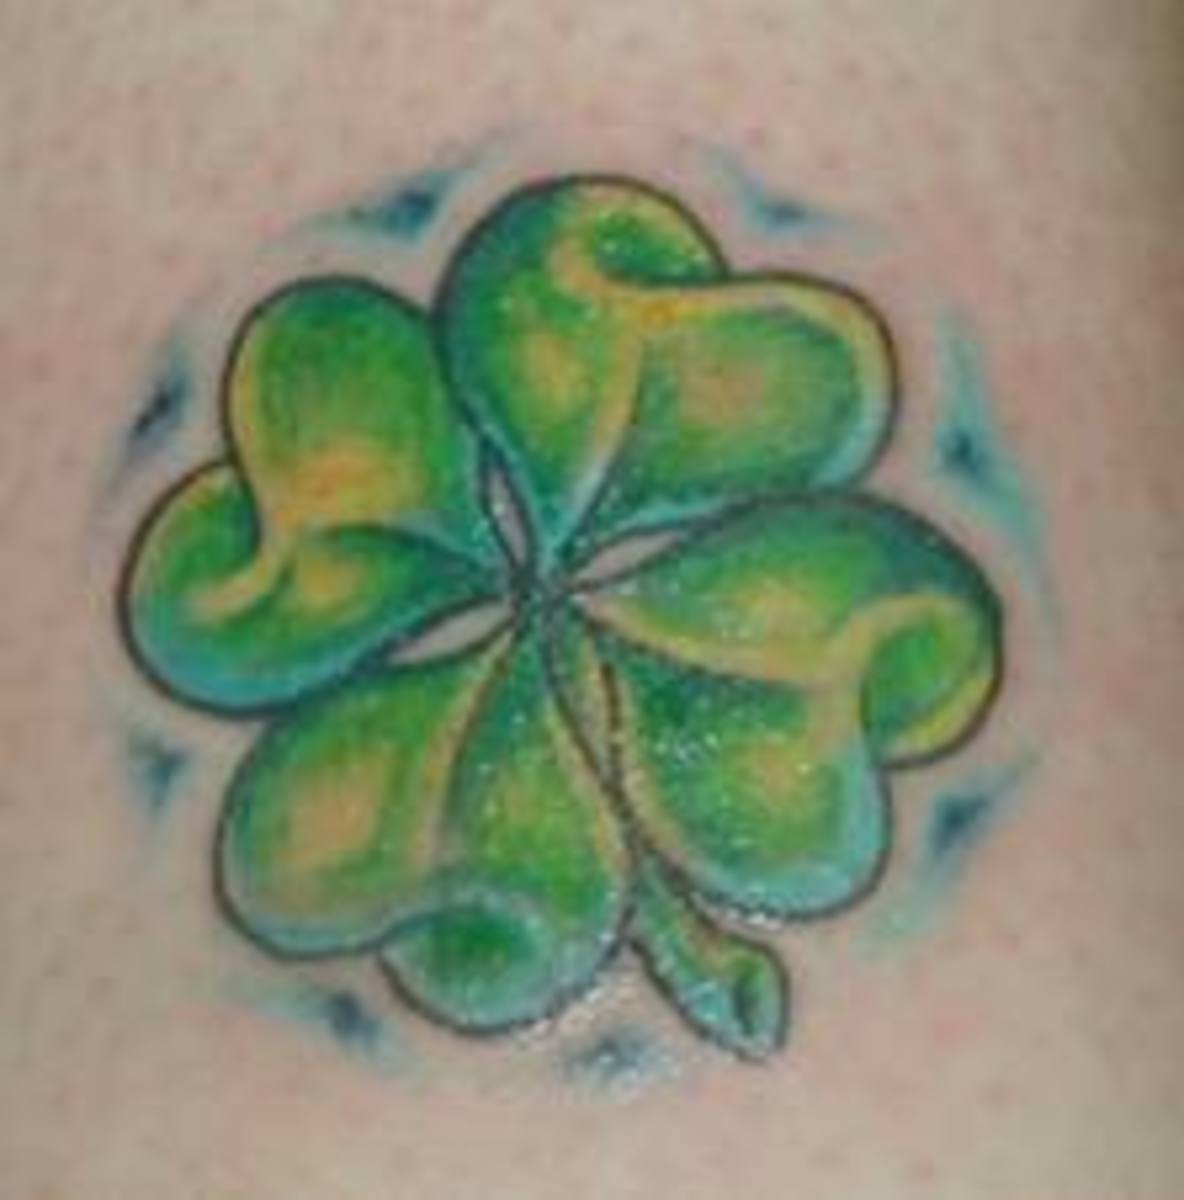 Top 50 cool Irish tattoos ideas for men and women to make - Legit.ng